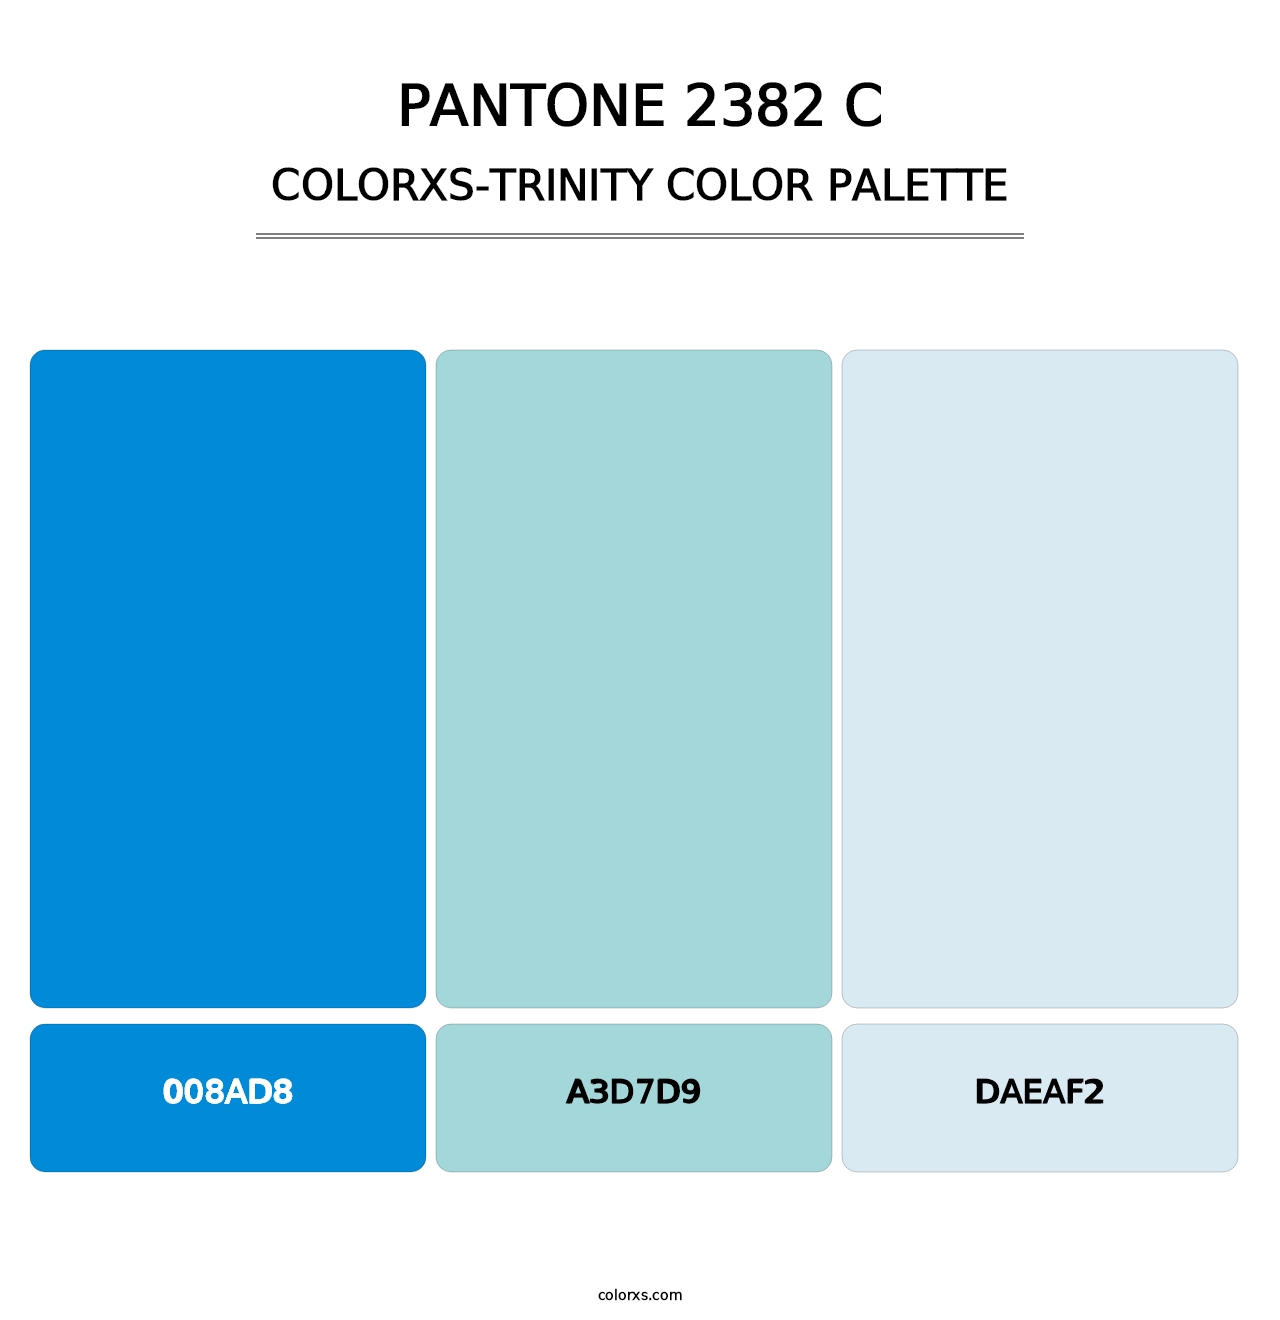 PANTONE 2382 C - Colorxs Trinity Palette